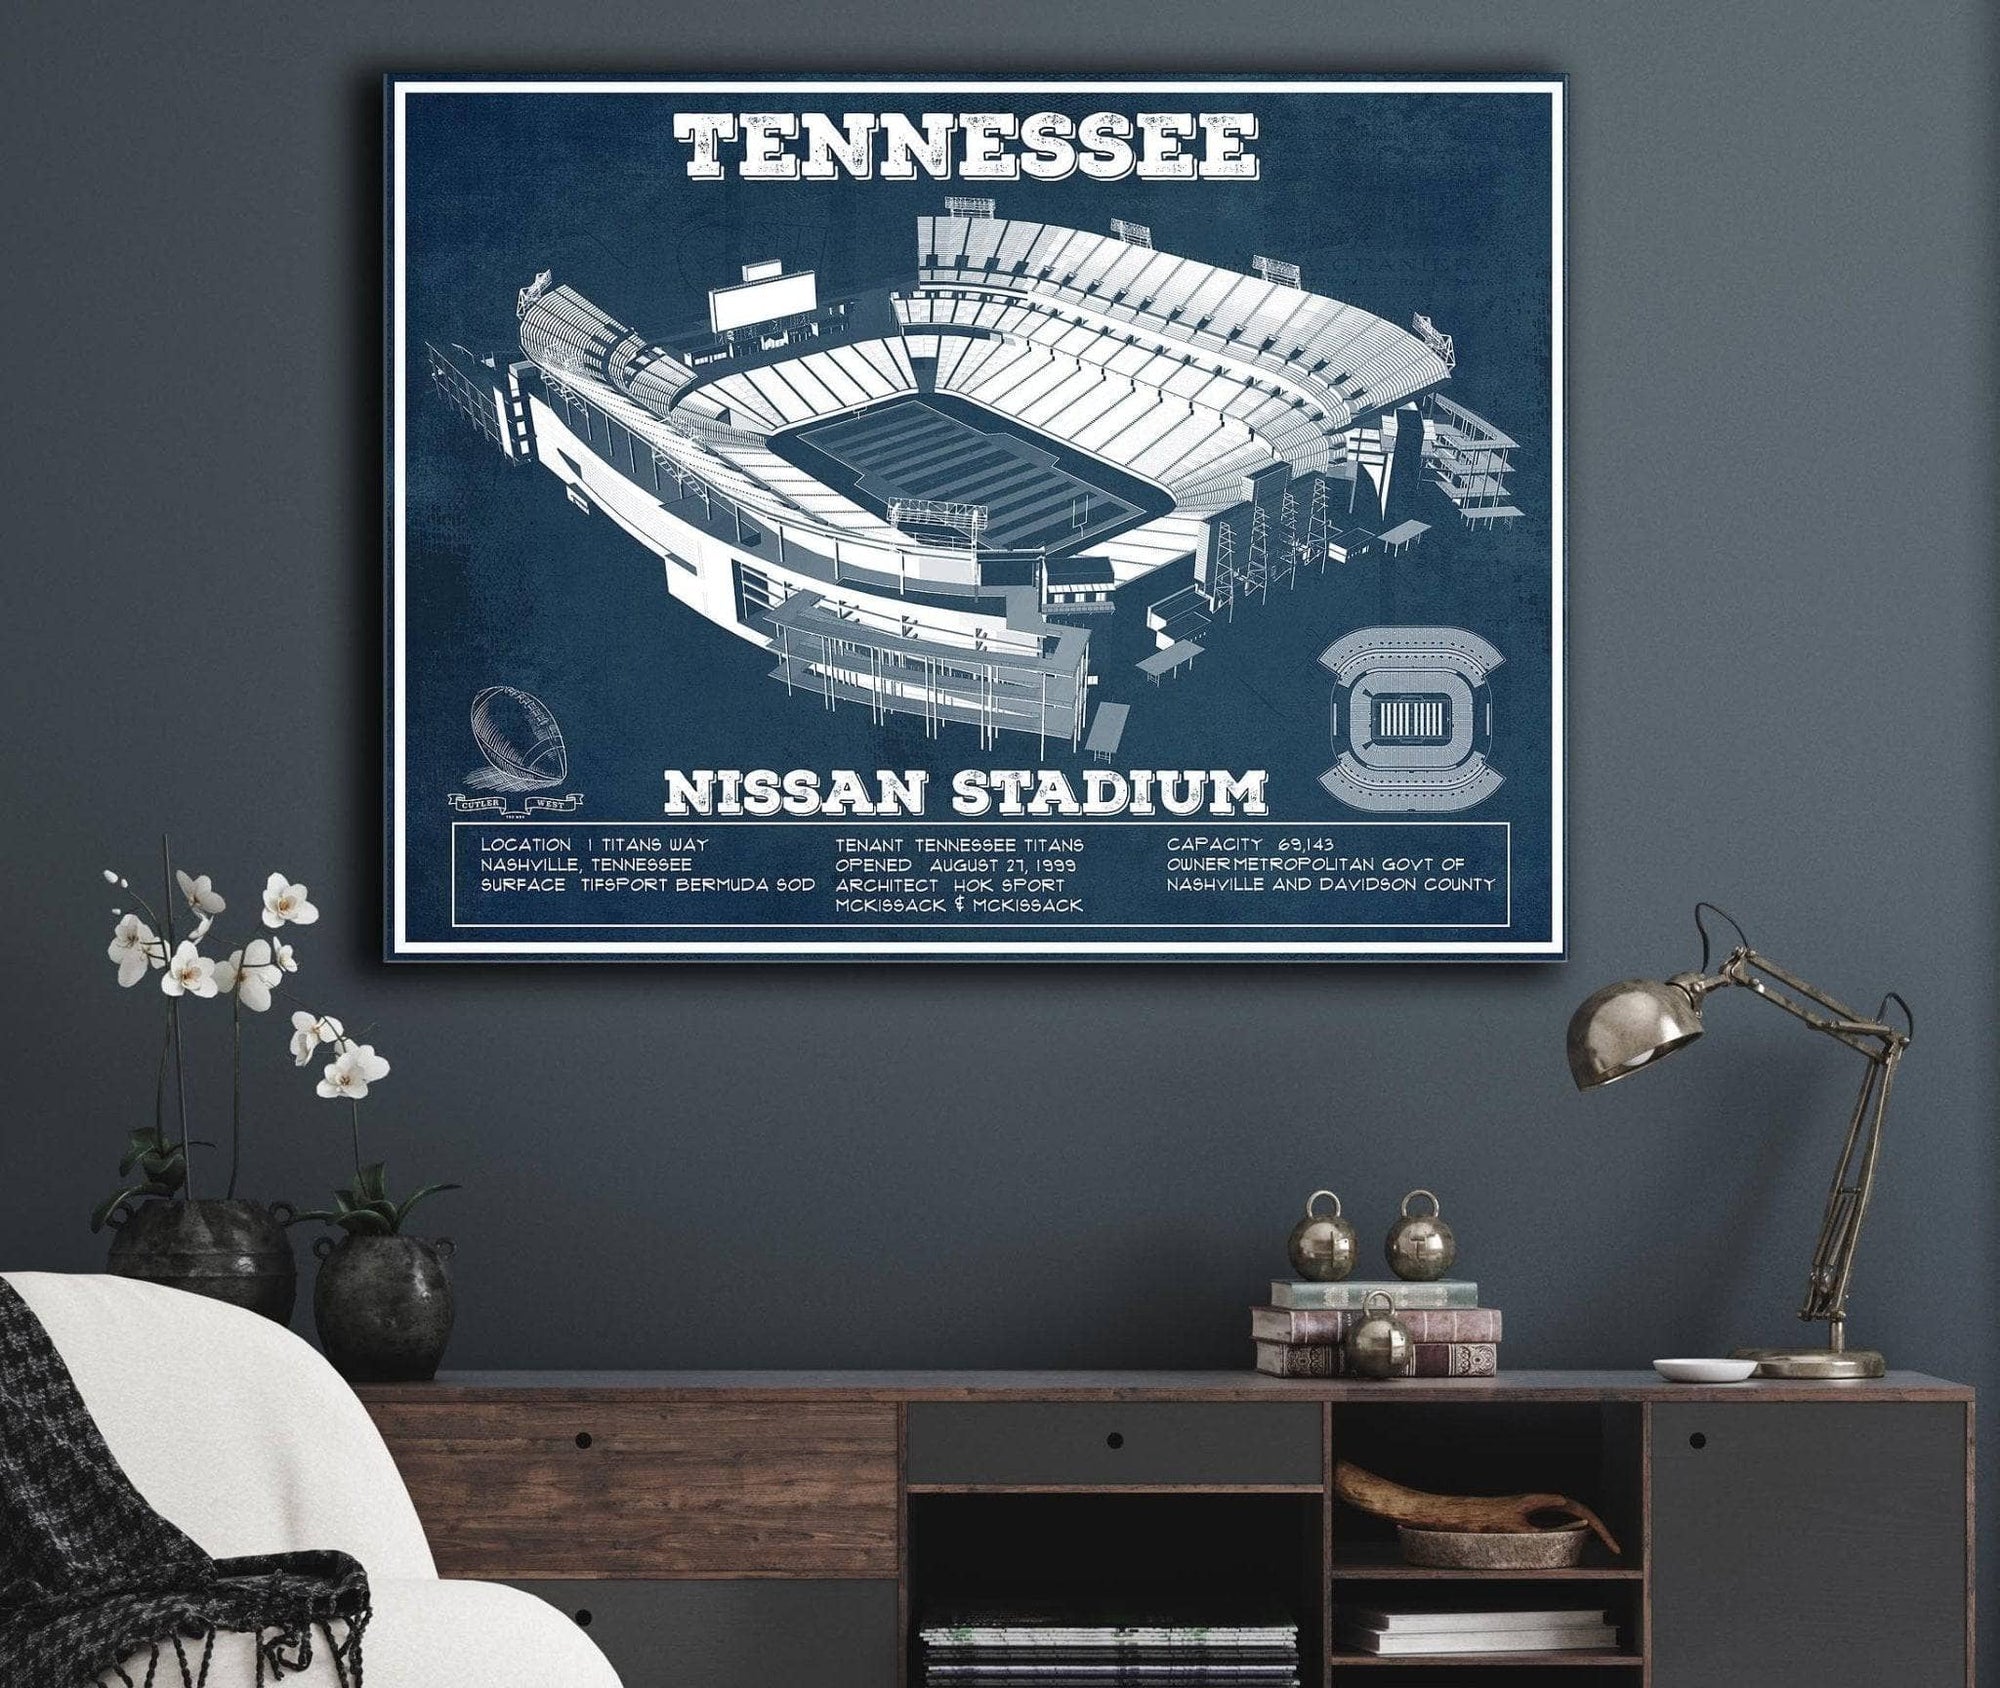 Cutler West Pro Football Collection 14" x 11" / Unframed Tennessee Titans Nissan Stadium - Vintage Football Print 712523627_462